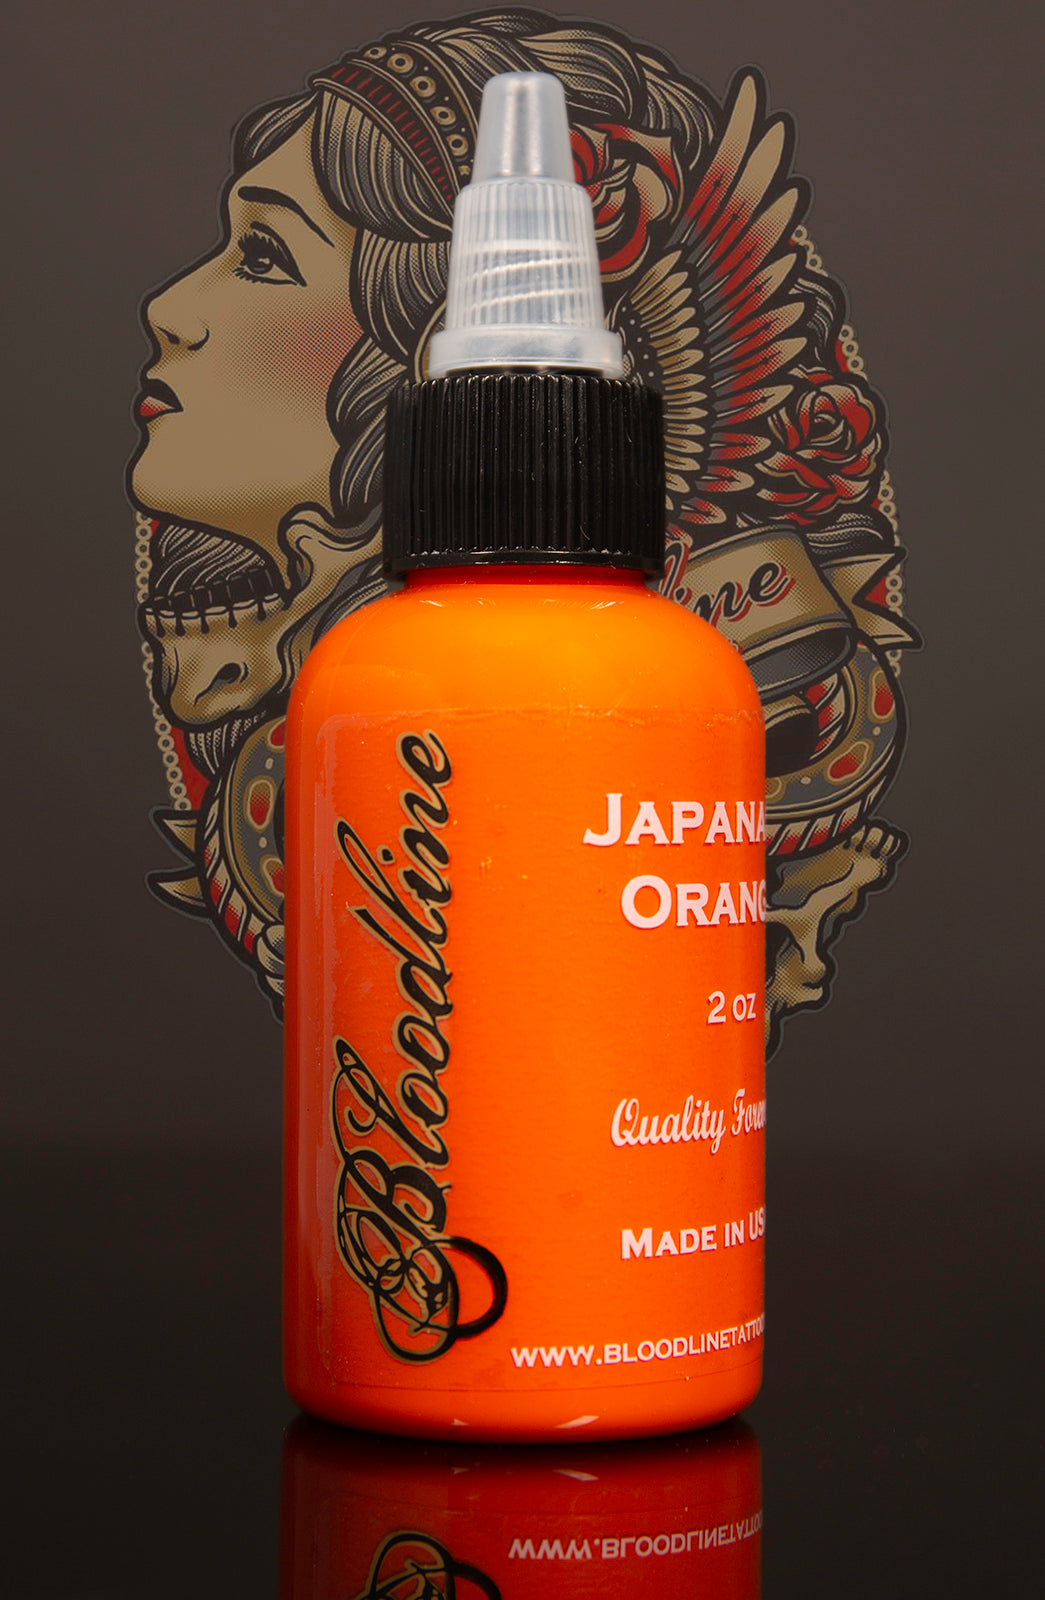 BLOODLINE - Japanese Orange